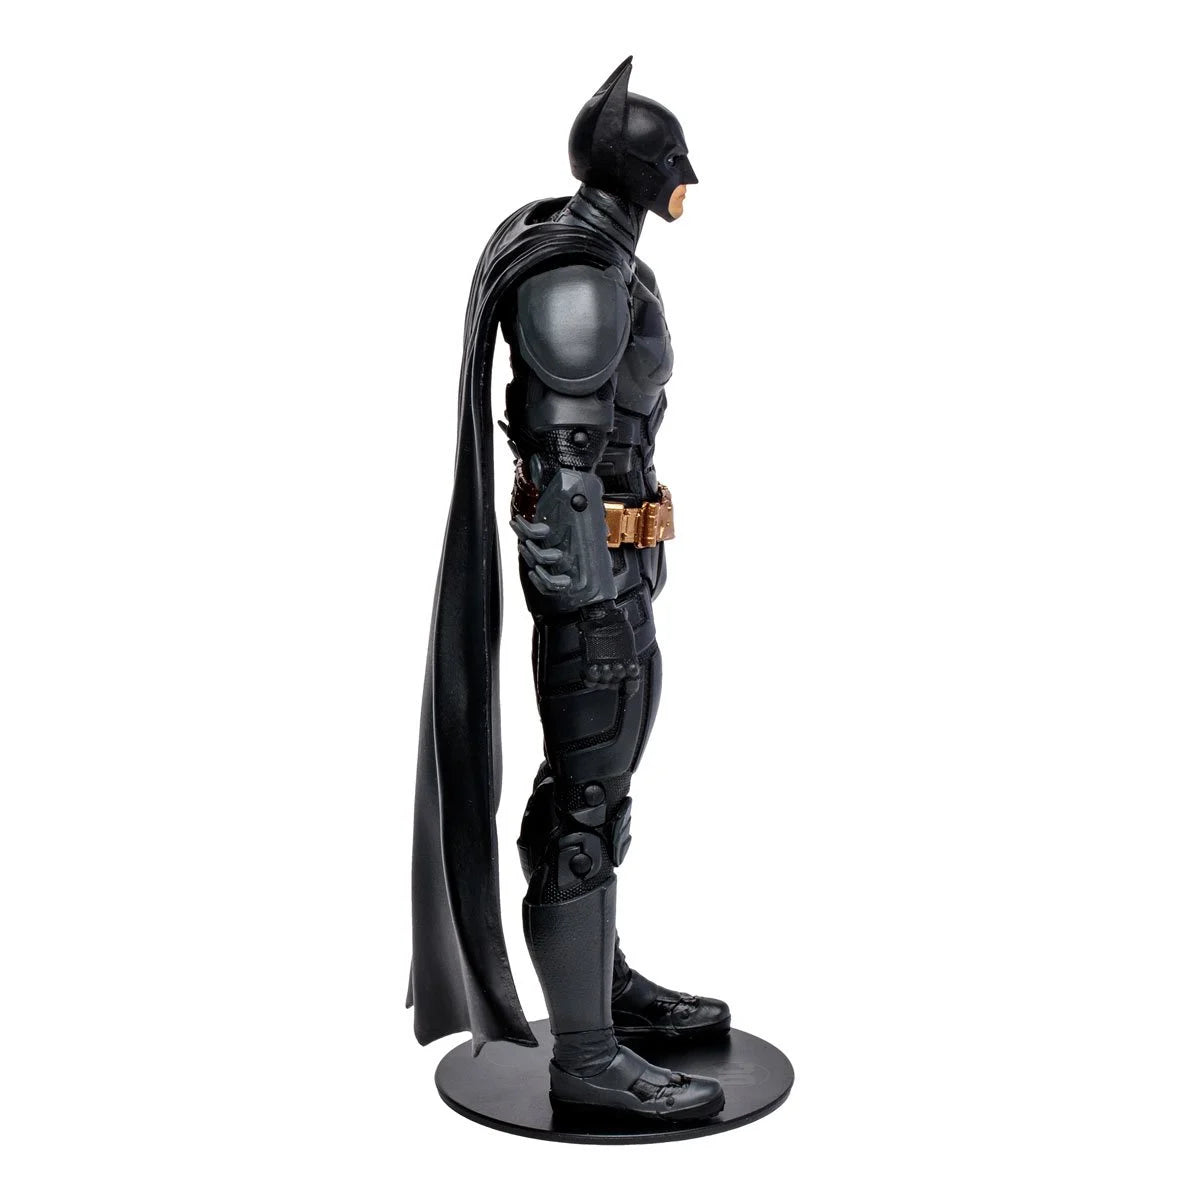 DC Build-A The Dark Knight Trilogy Batman 7-Inch Scale Action Figure